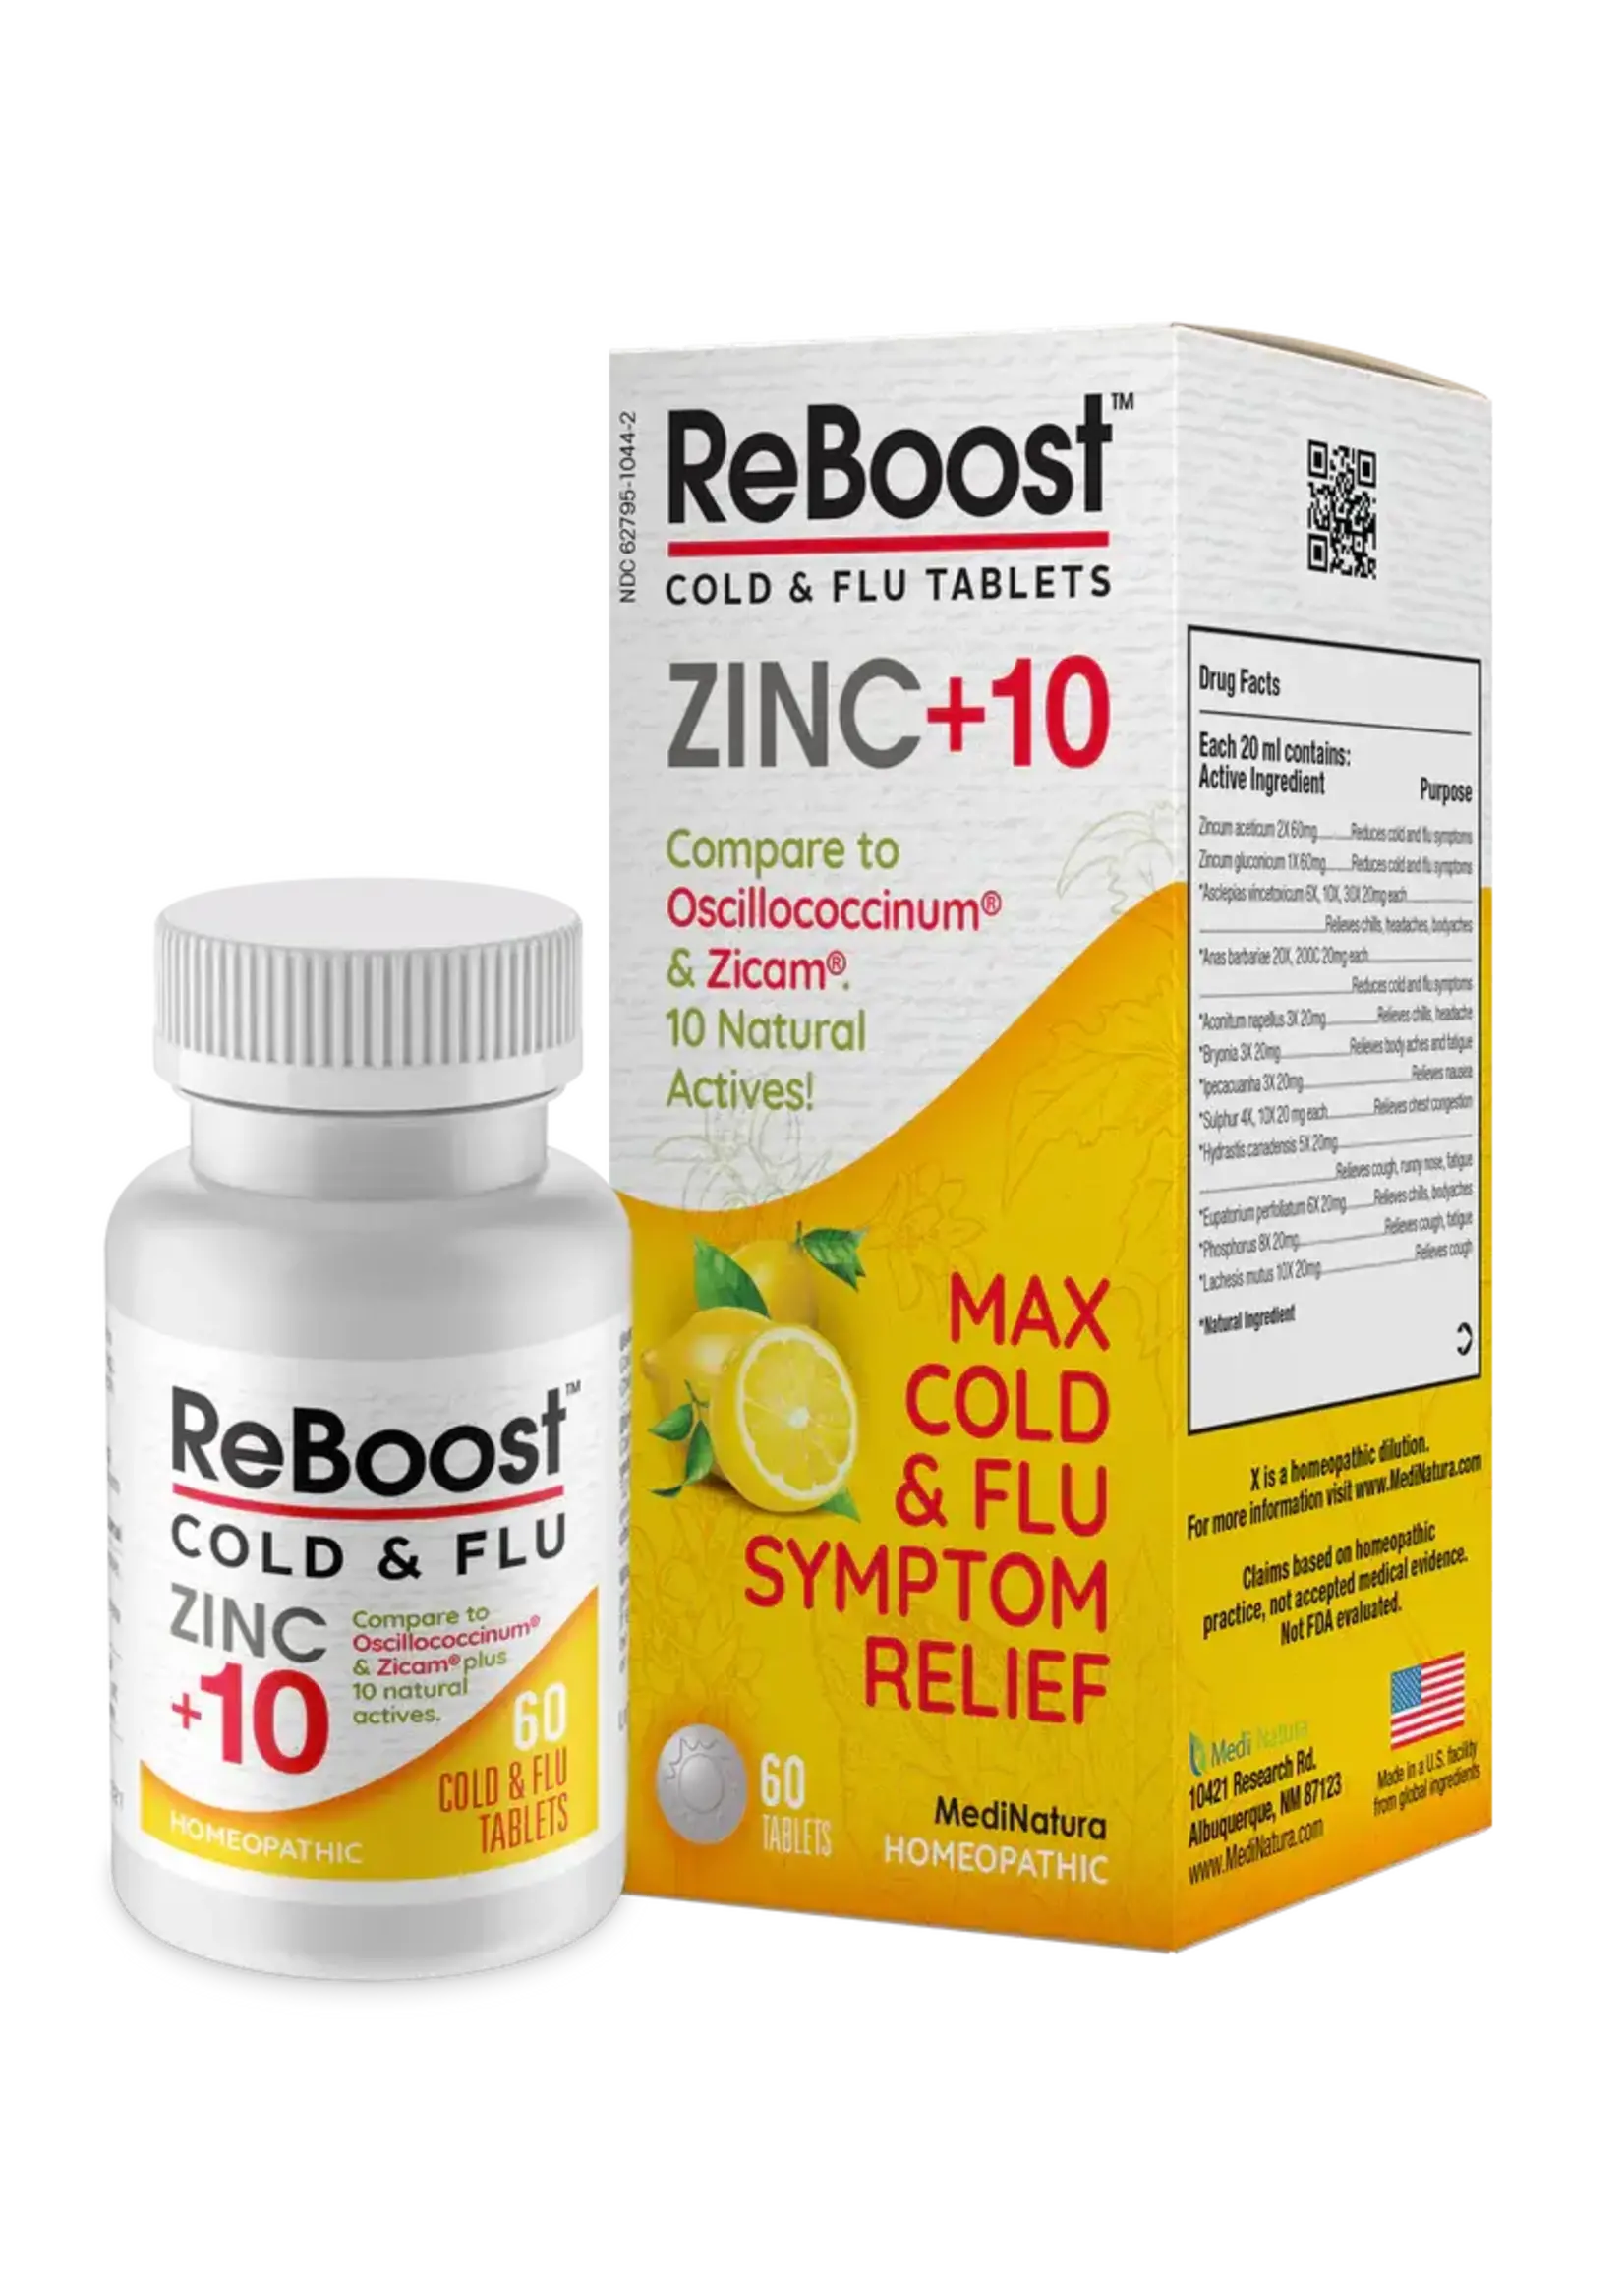 MediNatura ReBoost Cold & Flu Tablets Zinc +10 – Lemon – 60 Tablets